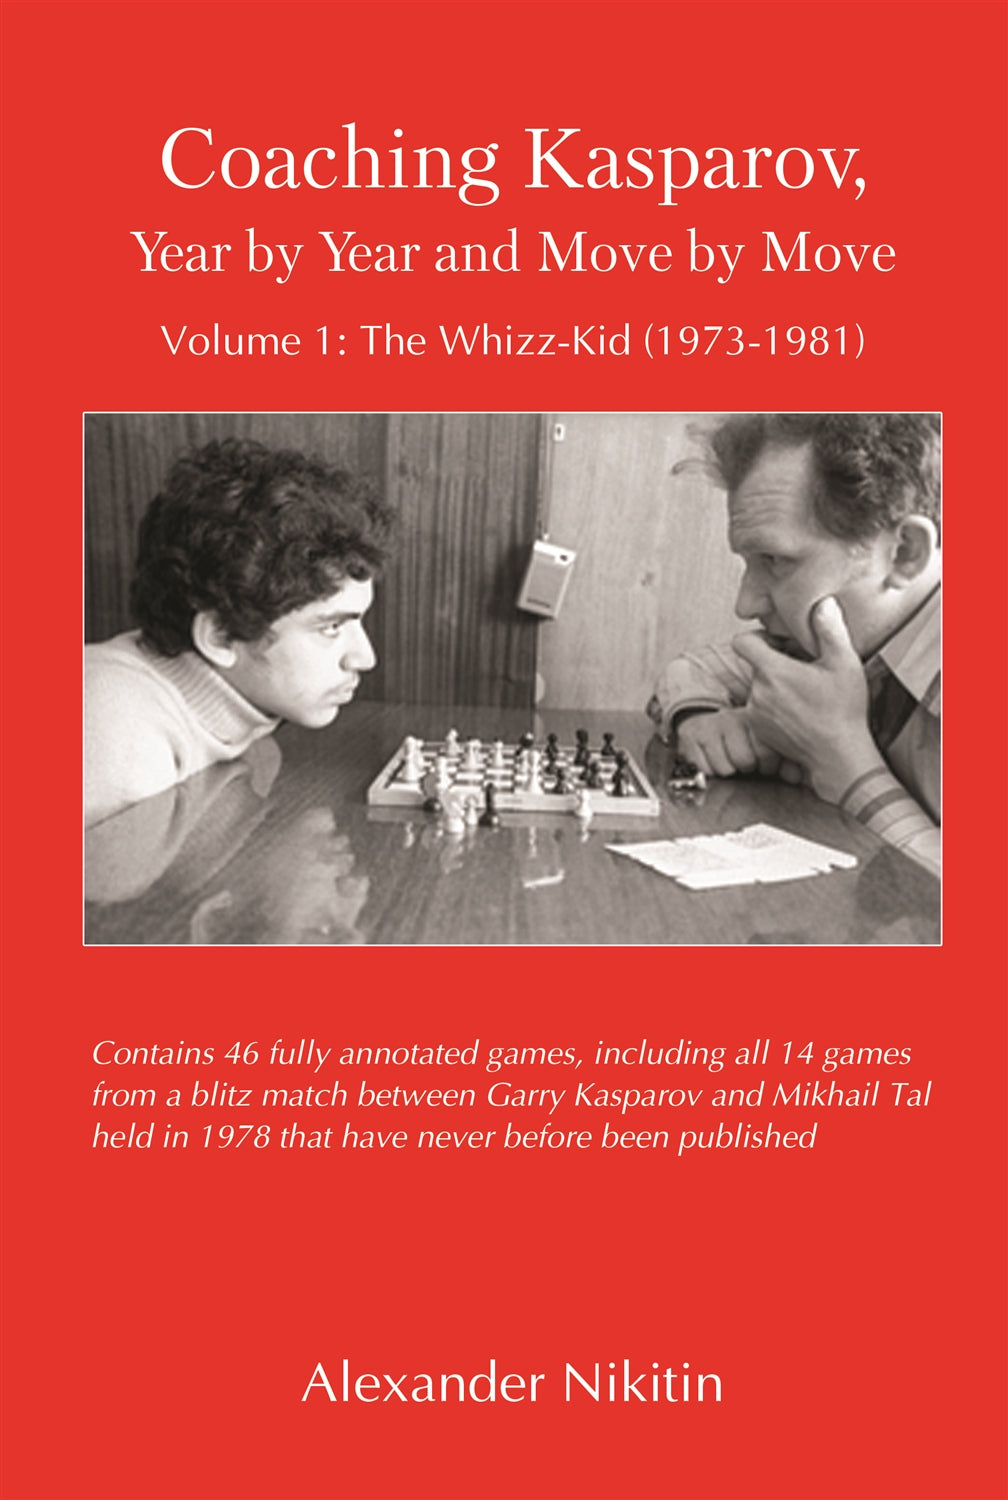 Garry Kasparov on My Great Predecessors - Part V - A modern